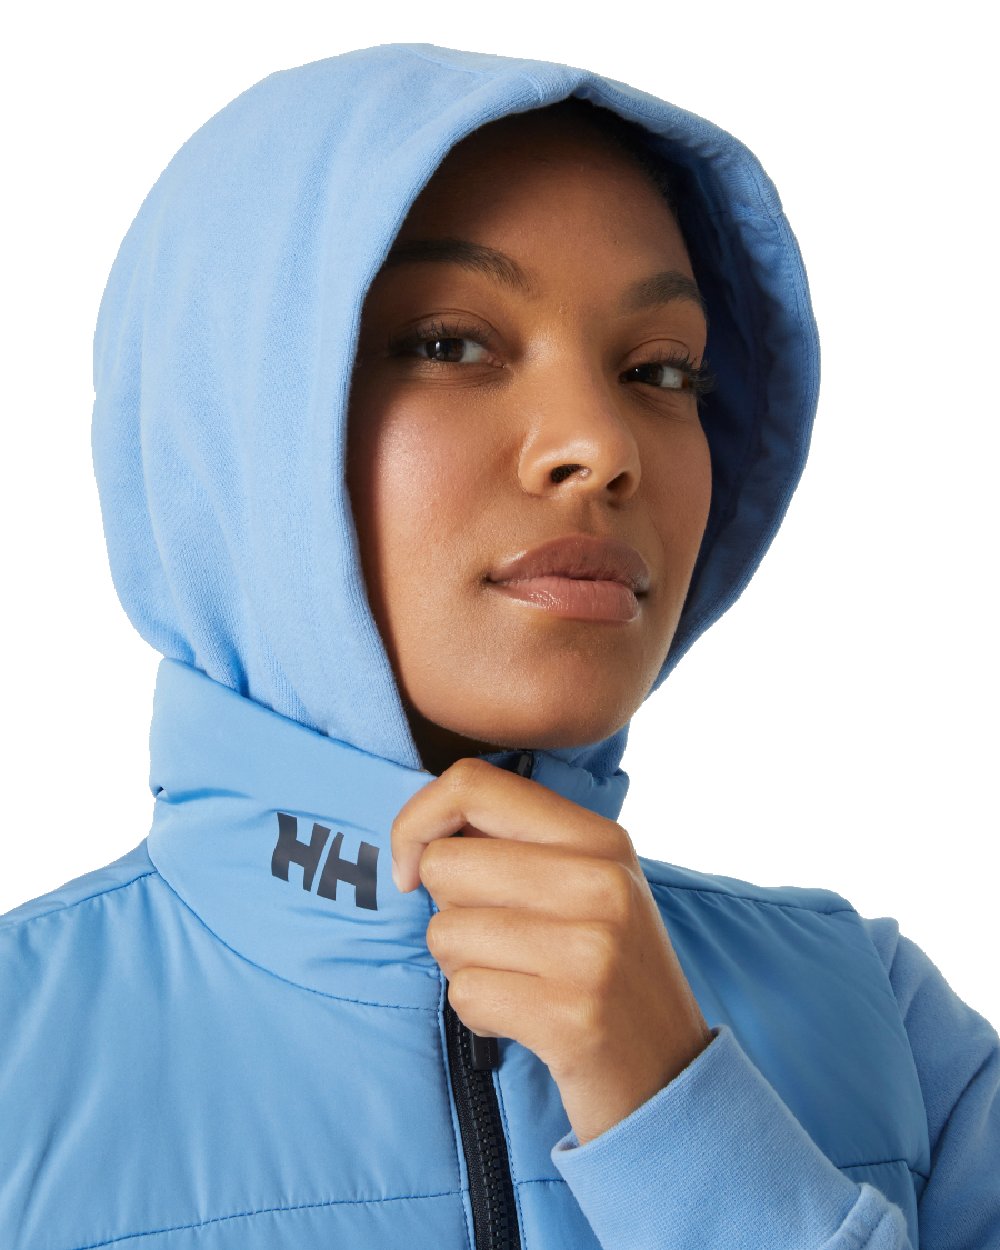 Helly Hansen Womens Crew Insulated Vest 2.0 in Bright Blue 